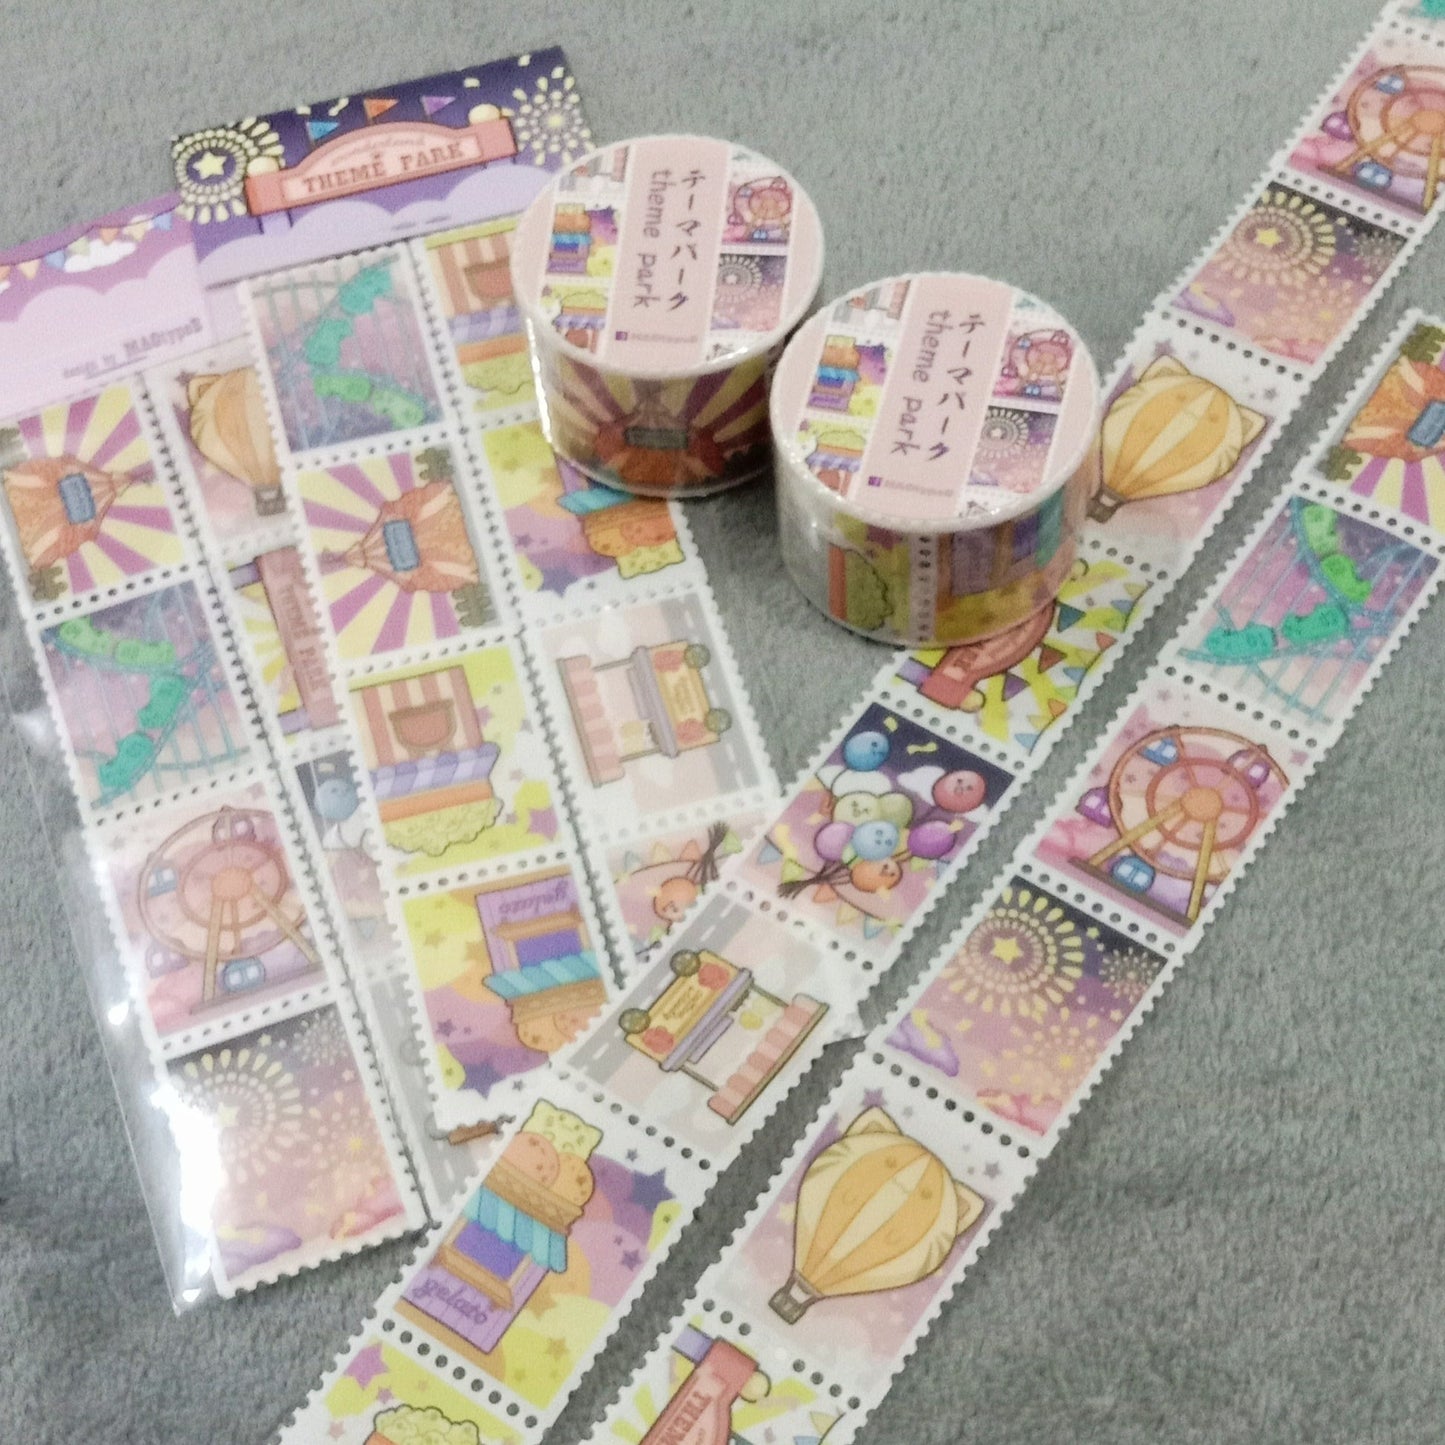 Theme Park stamp washi tape